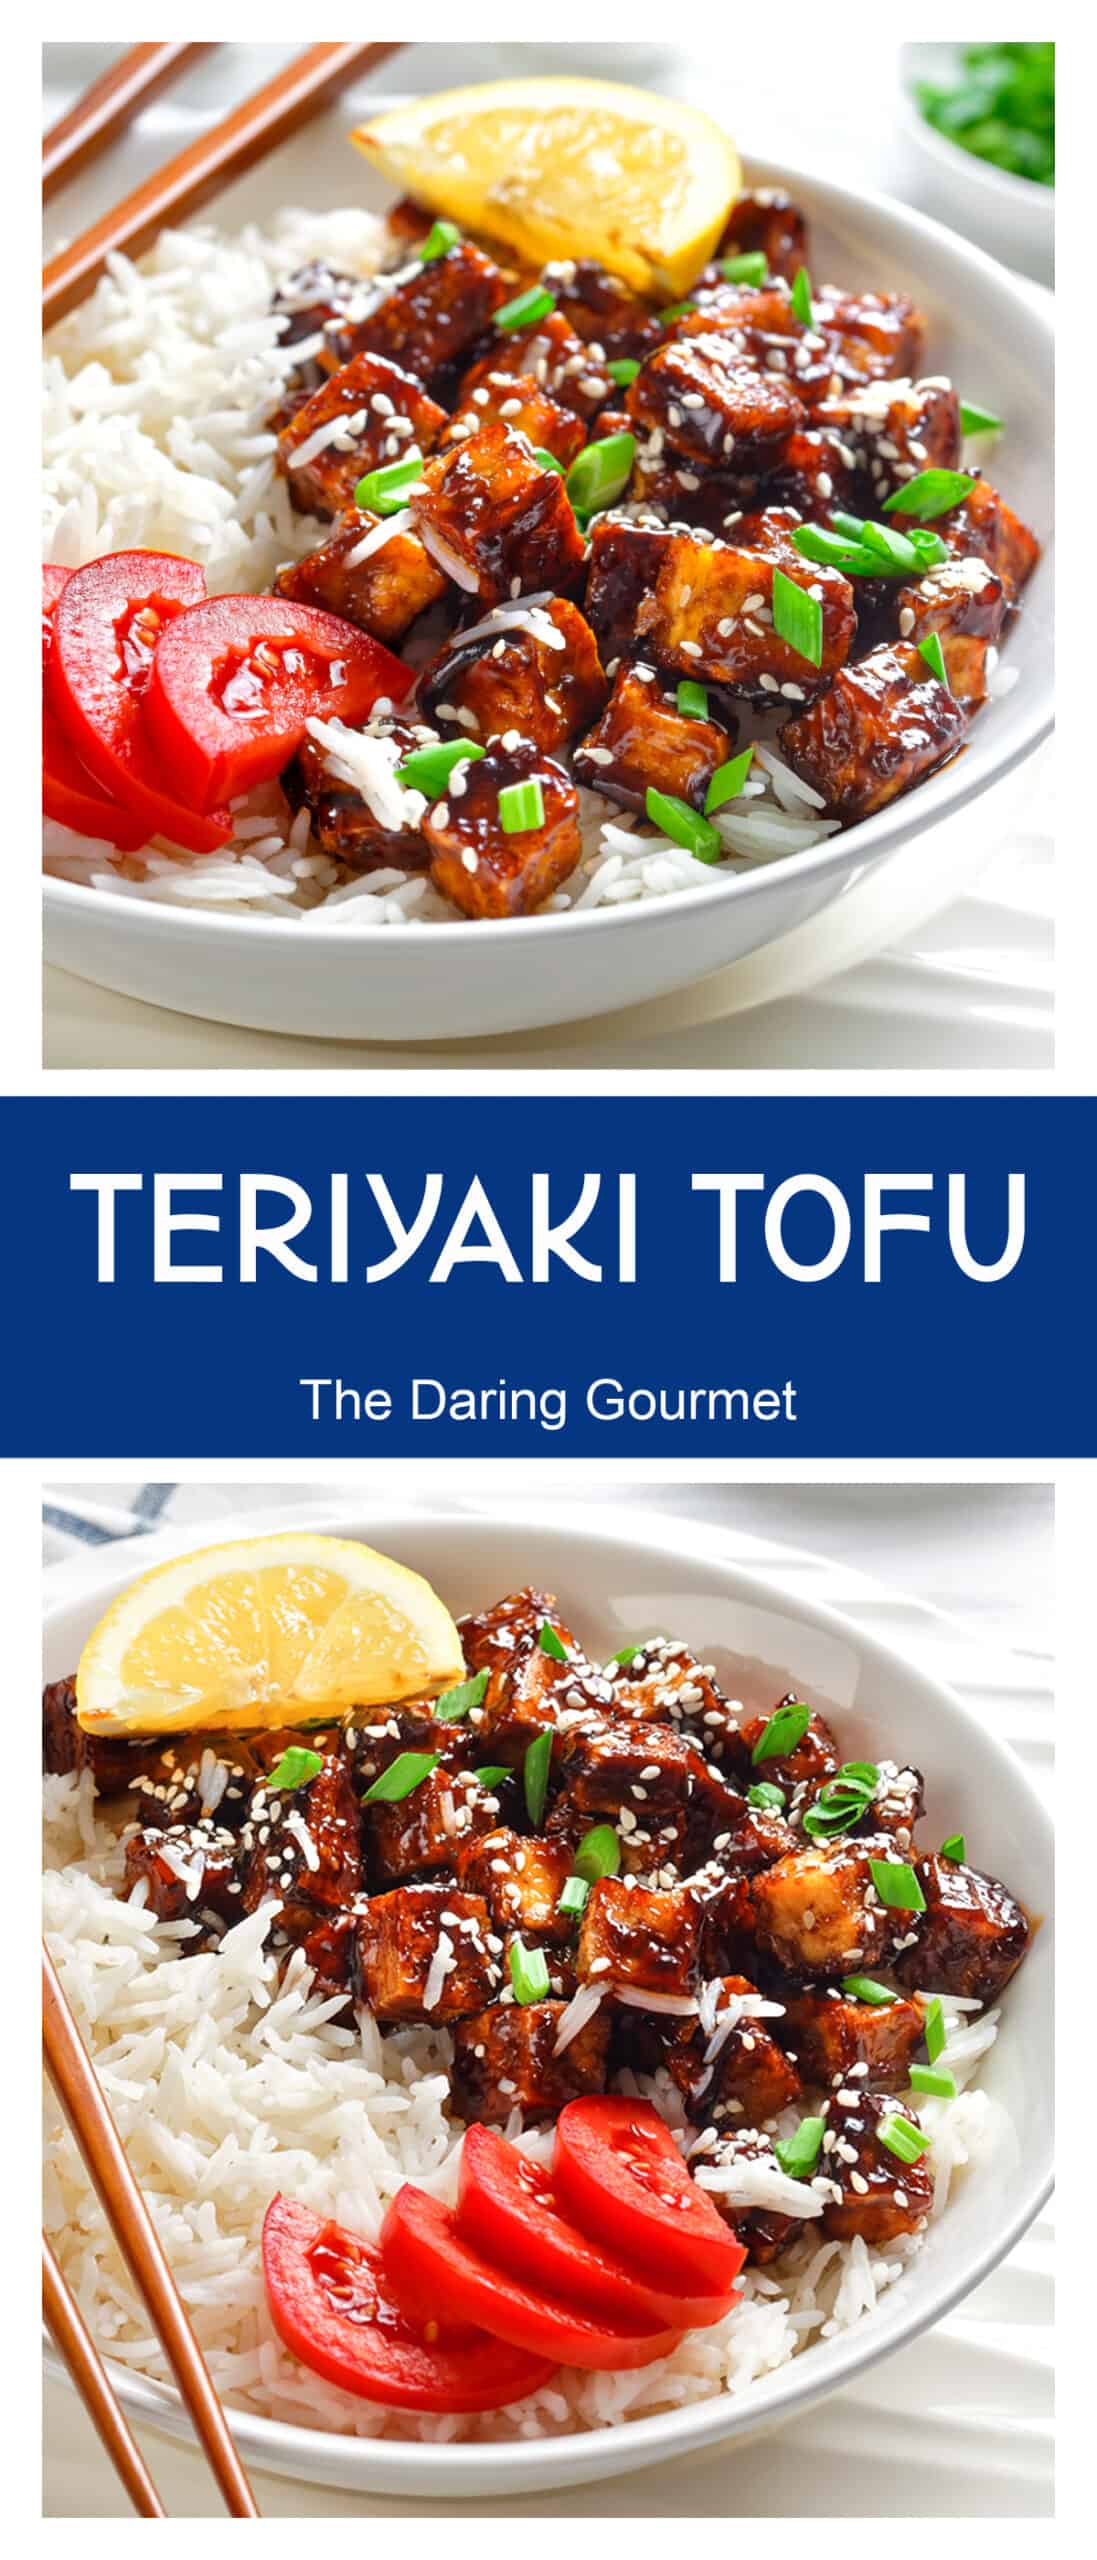 teriyaki tofu recipe vegetarian vegan gluten free best crispy oven baked